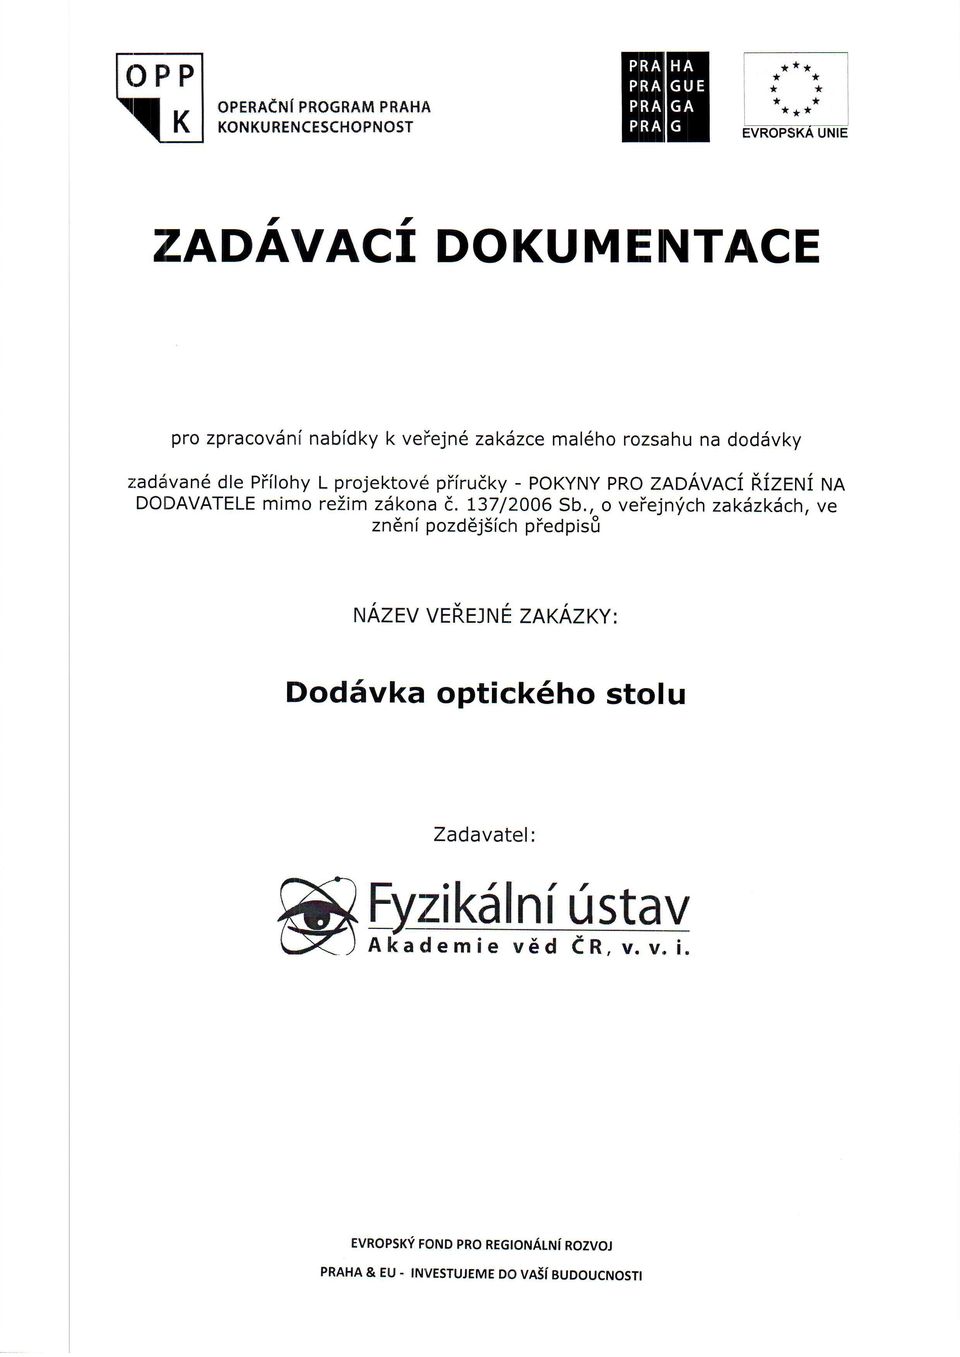 pfirudky - POKYNY PRO ZnoAVRCf nizerui rrrn DODAVATELE mimo rezim zskona i. t37/2006 sb.